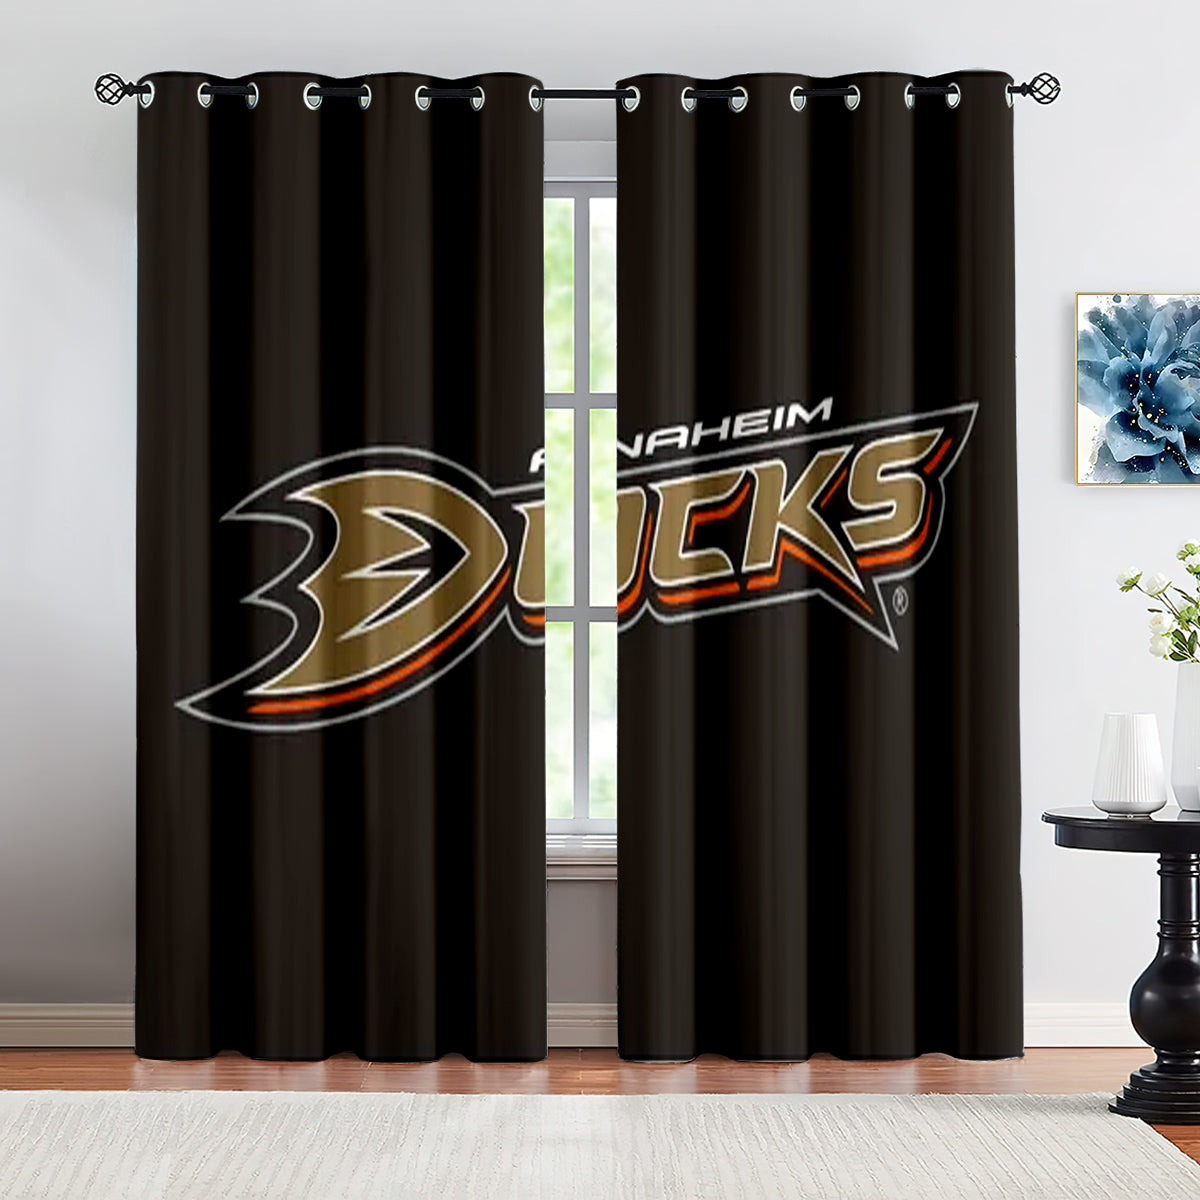 Anaheim Ducks Hockey League Blackout Curtains Drapes For Window Treatment Set